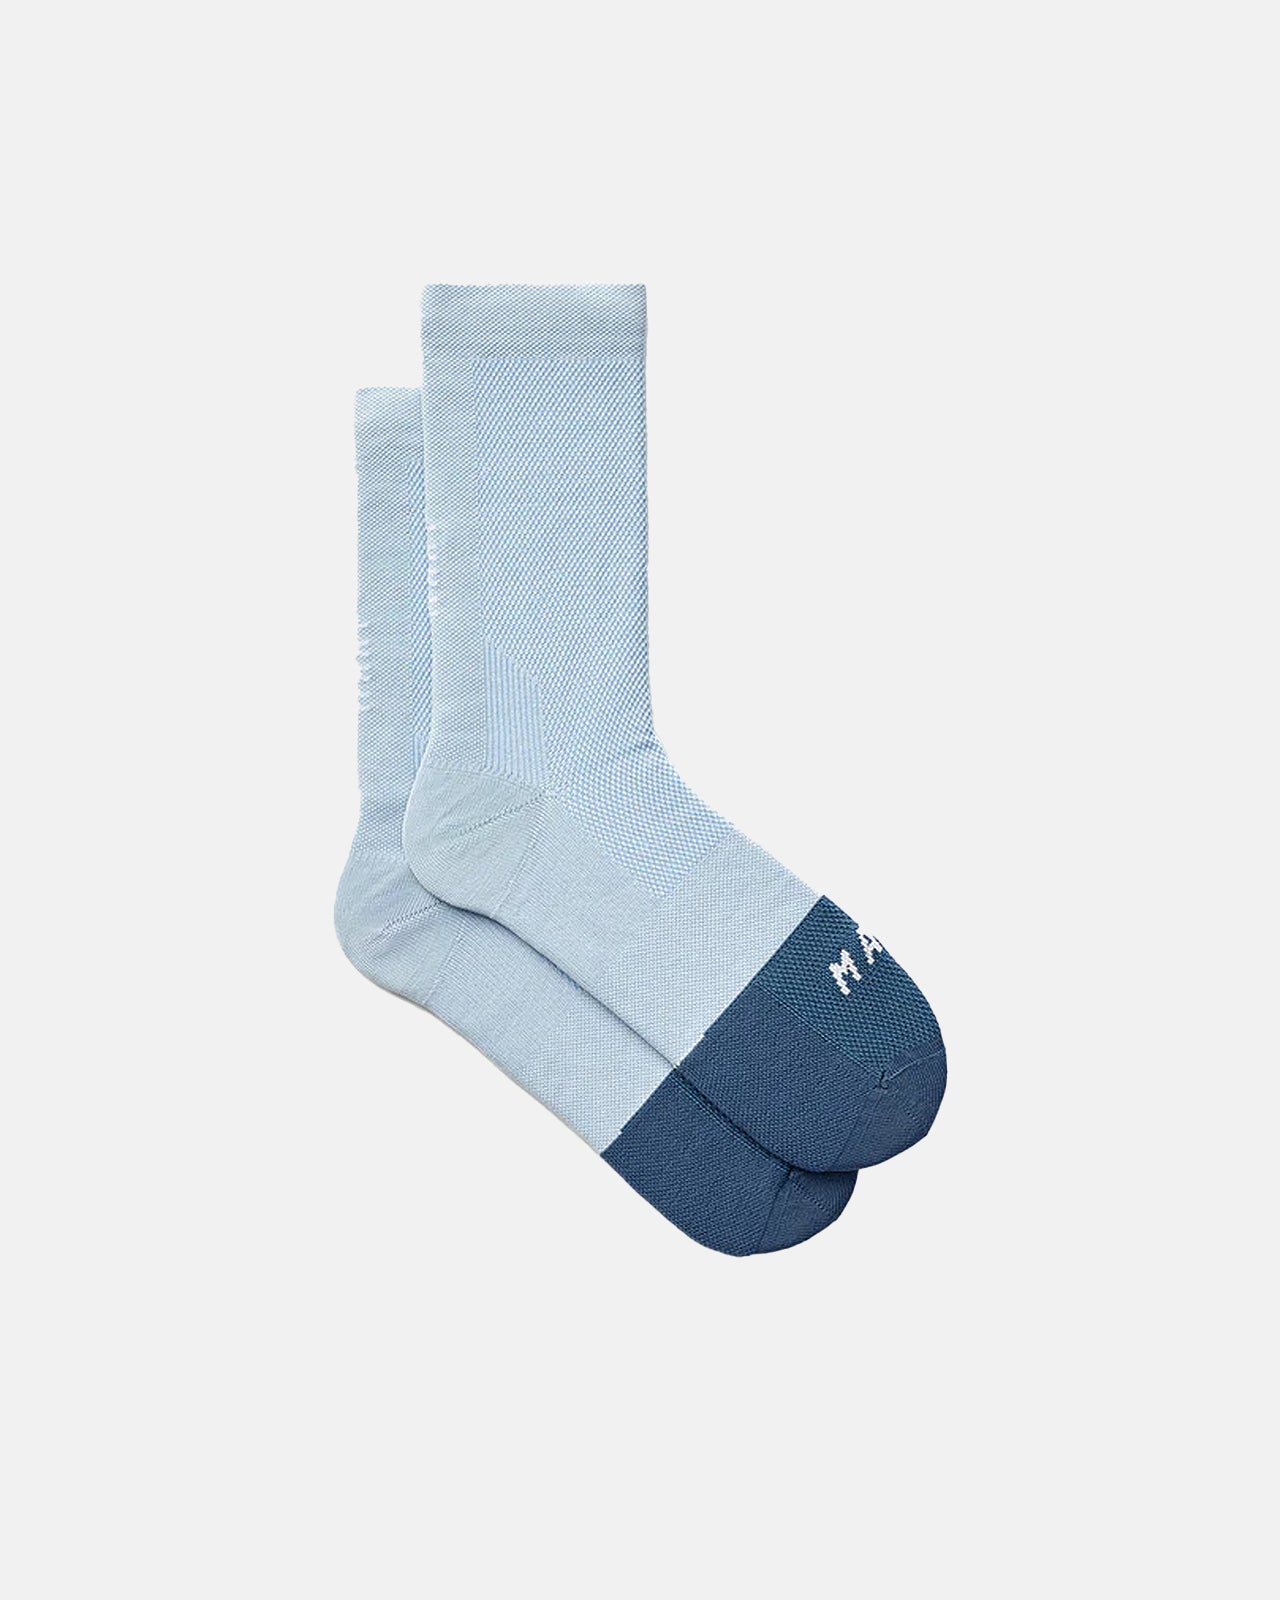 Division Sock - Stone Blue